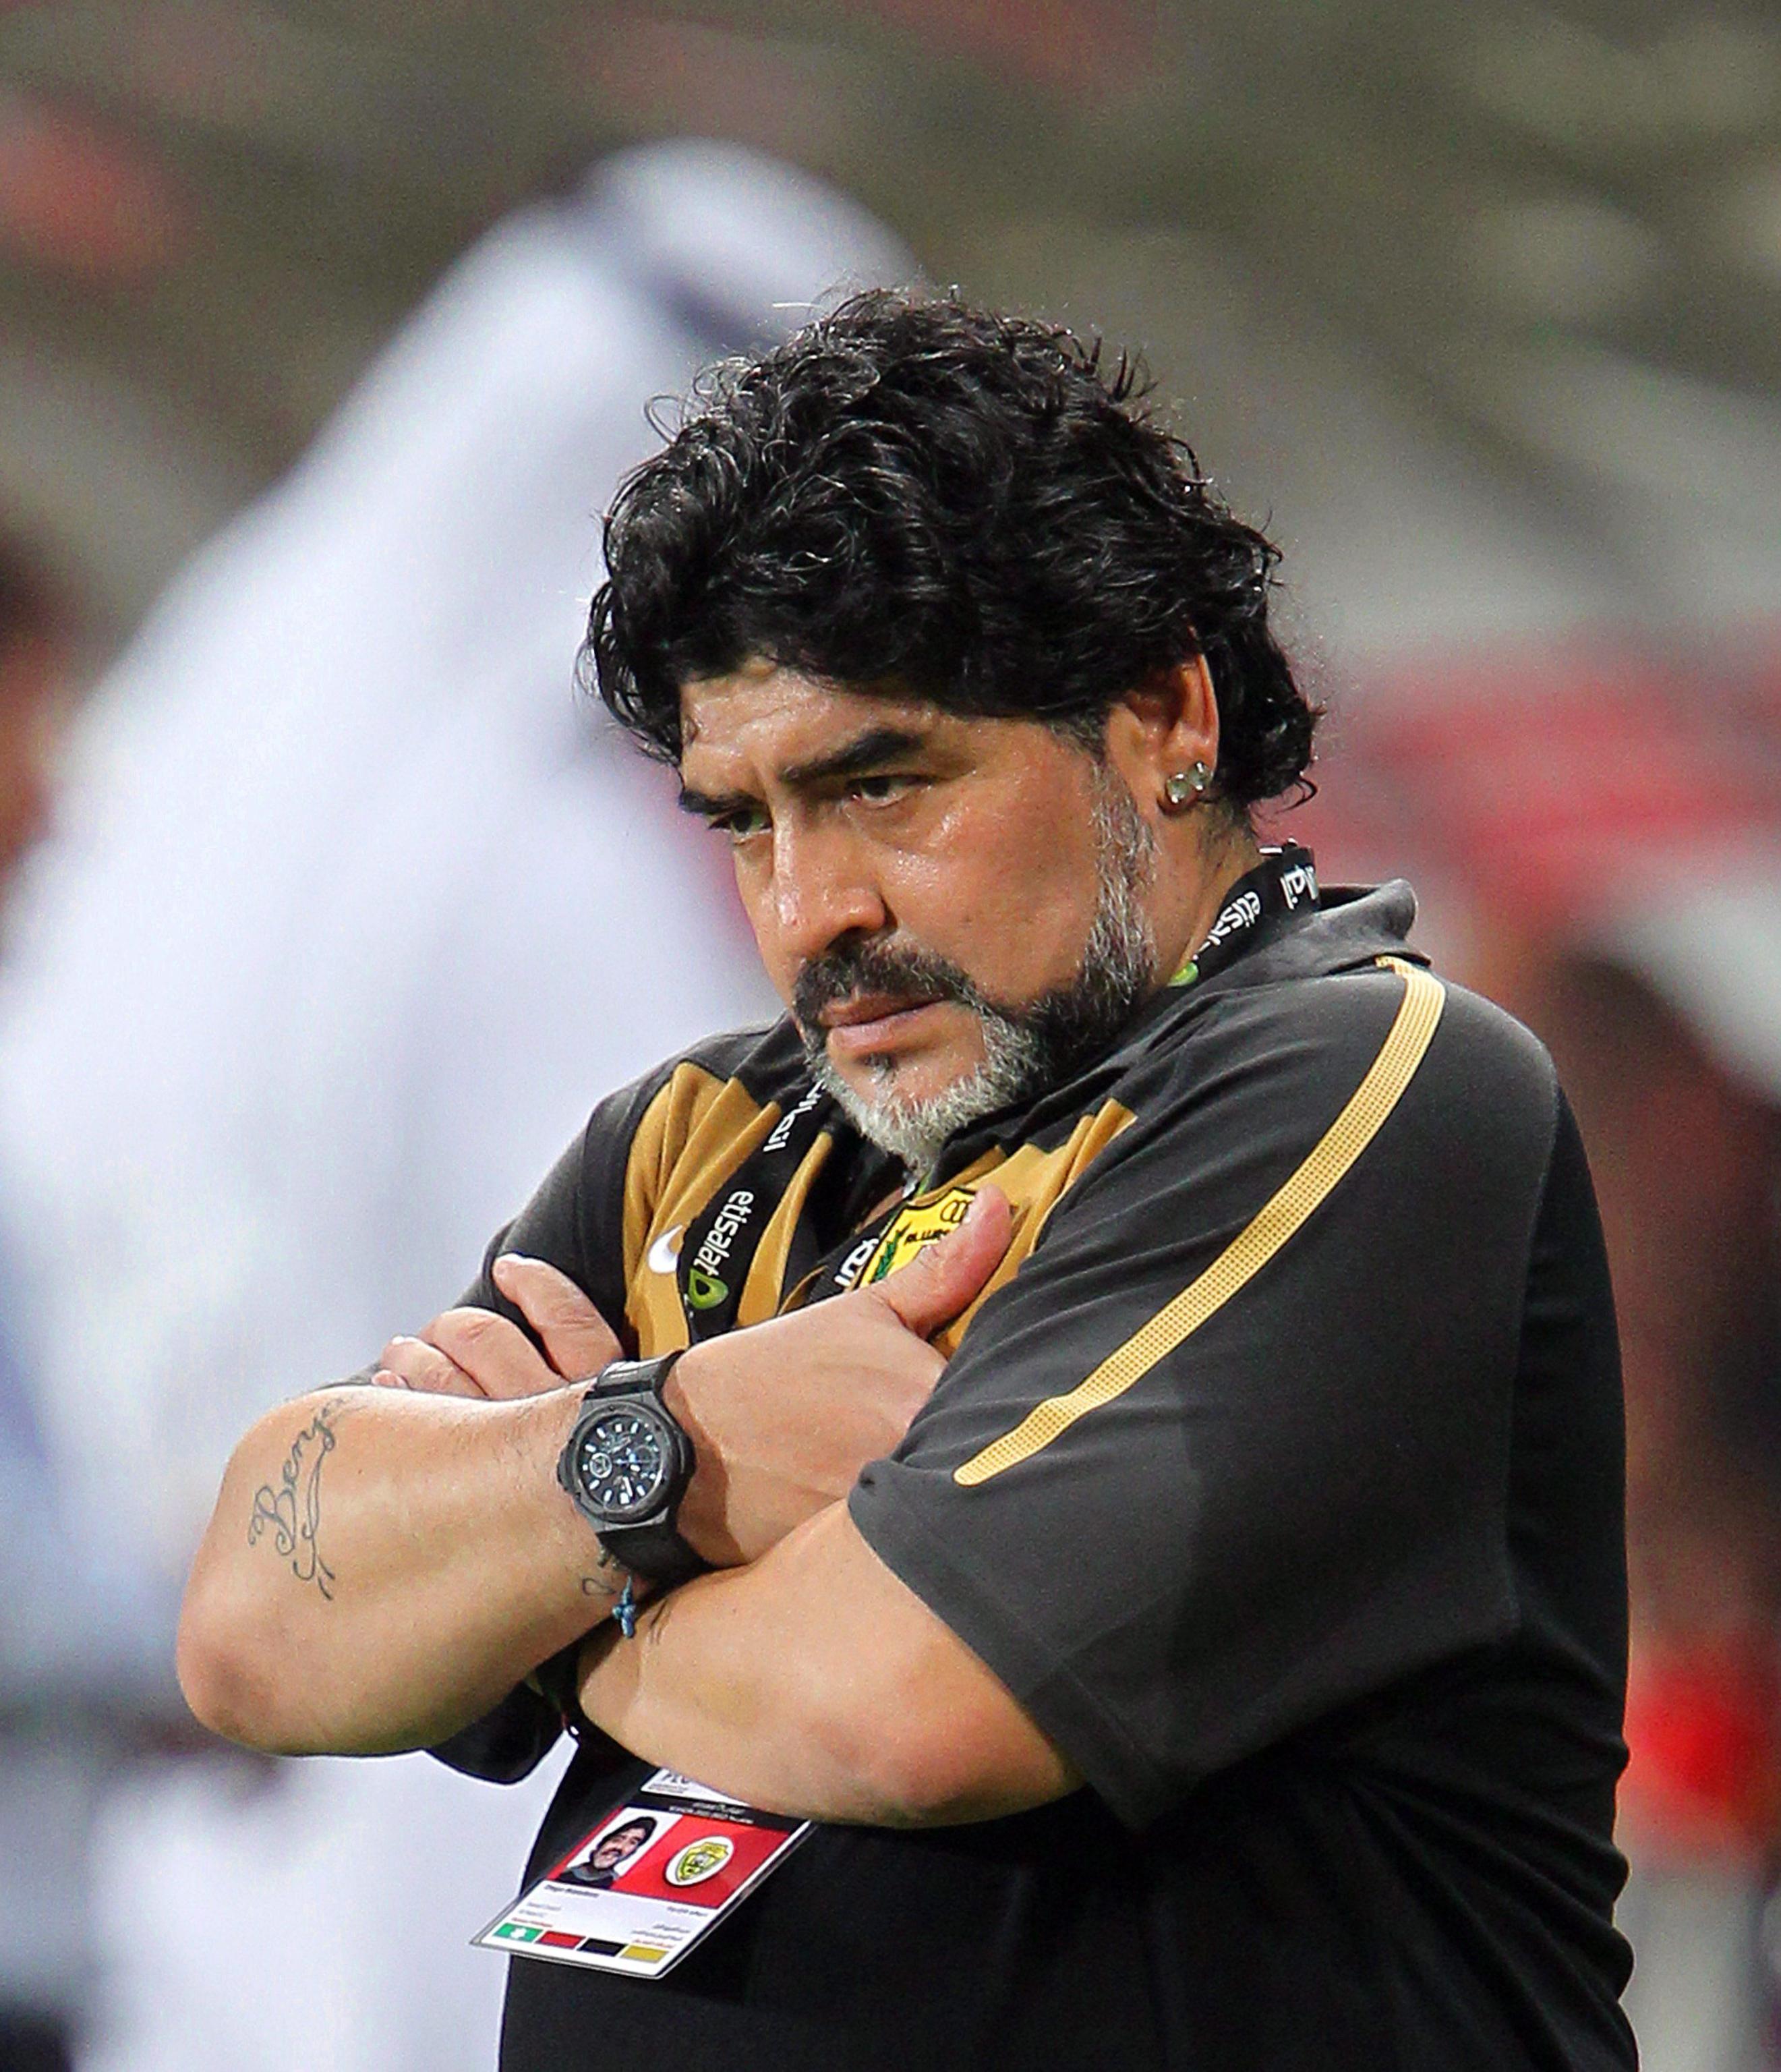 Diego Maradona furious after fan incidents in Dubai